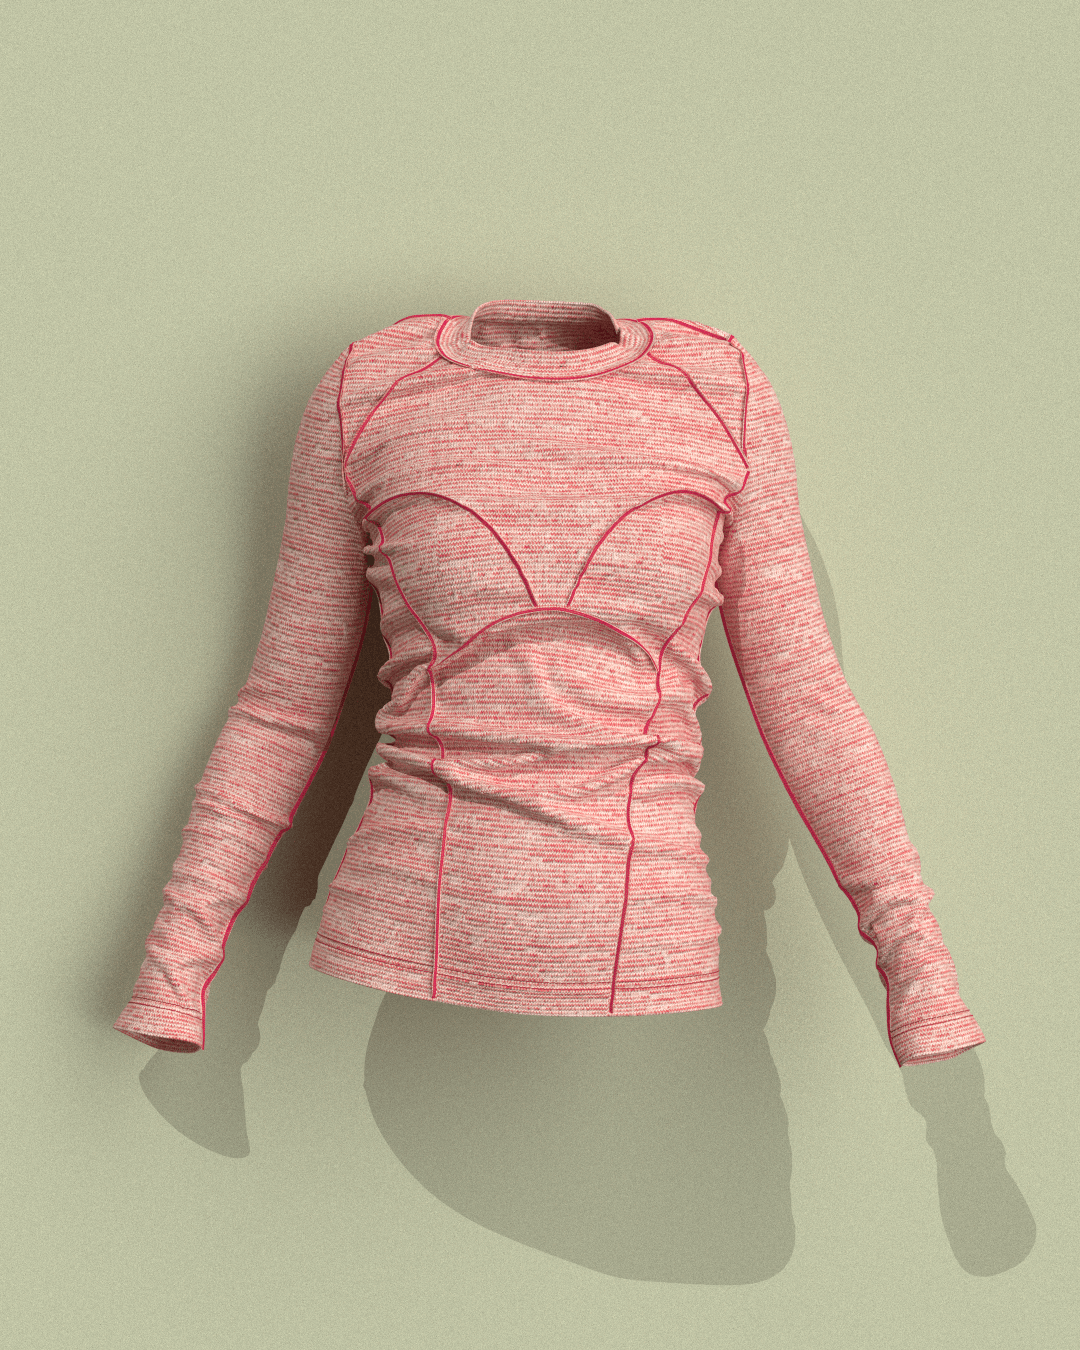 Clo3d fashion design Clothing Clo3D virtual fashion clo3ddesigner 3D Render clo3d designer digital fashion 3D Clothing